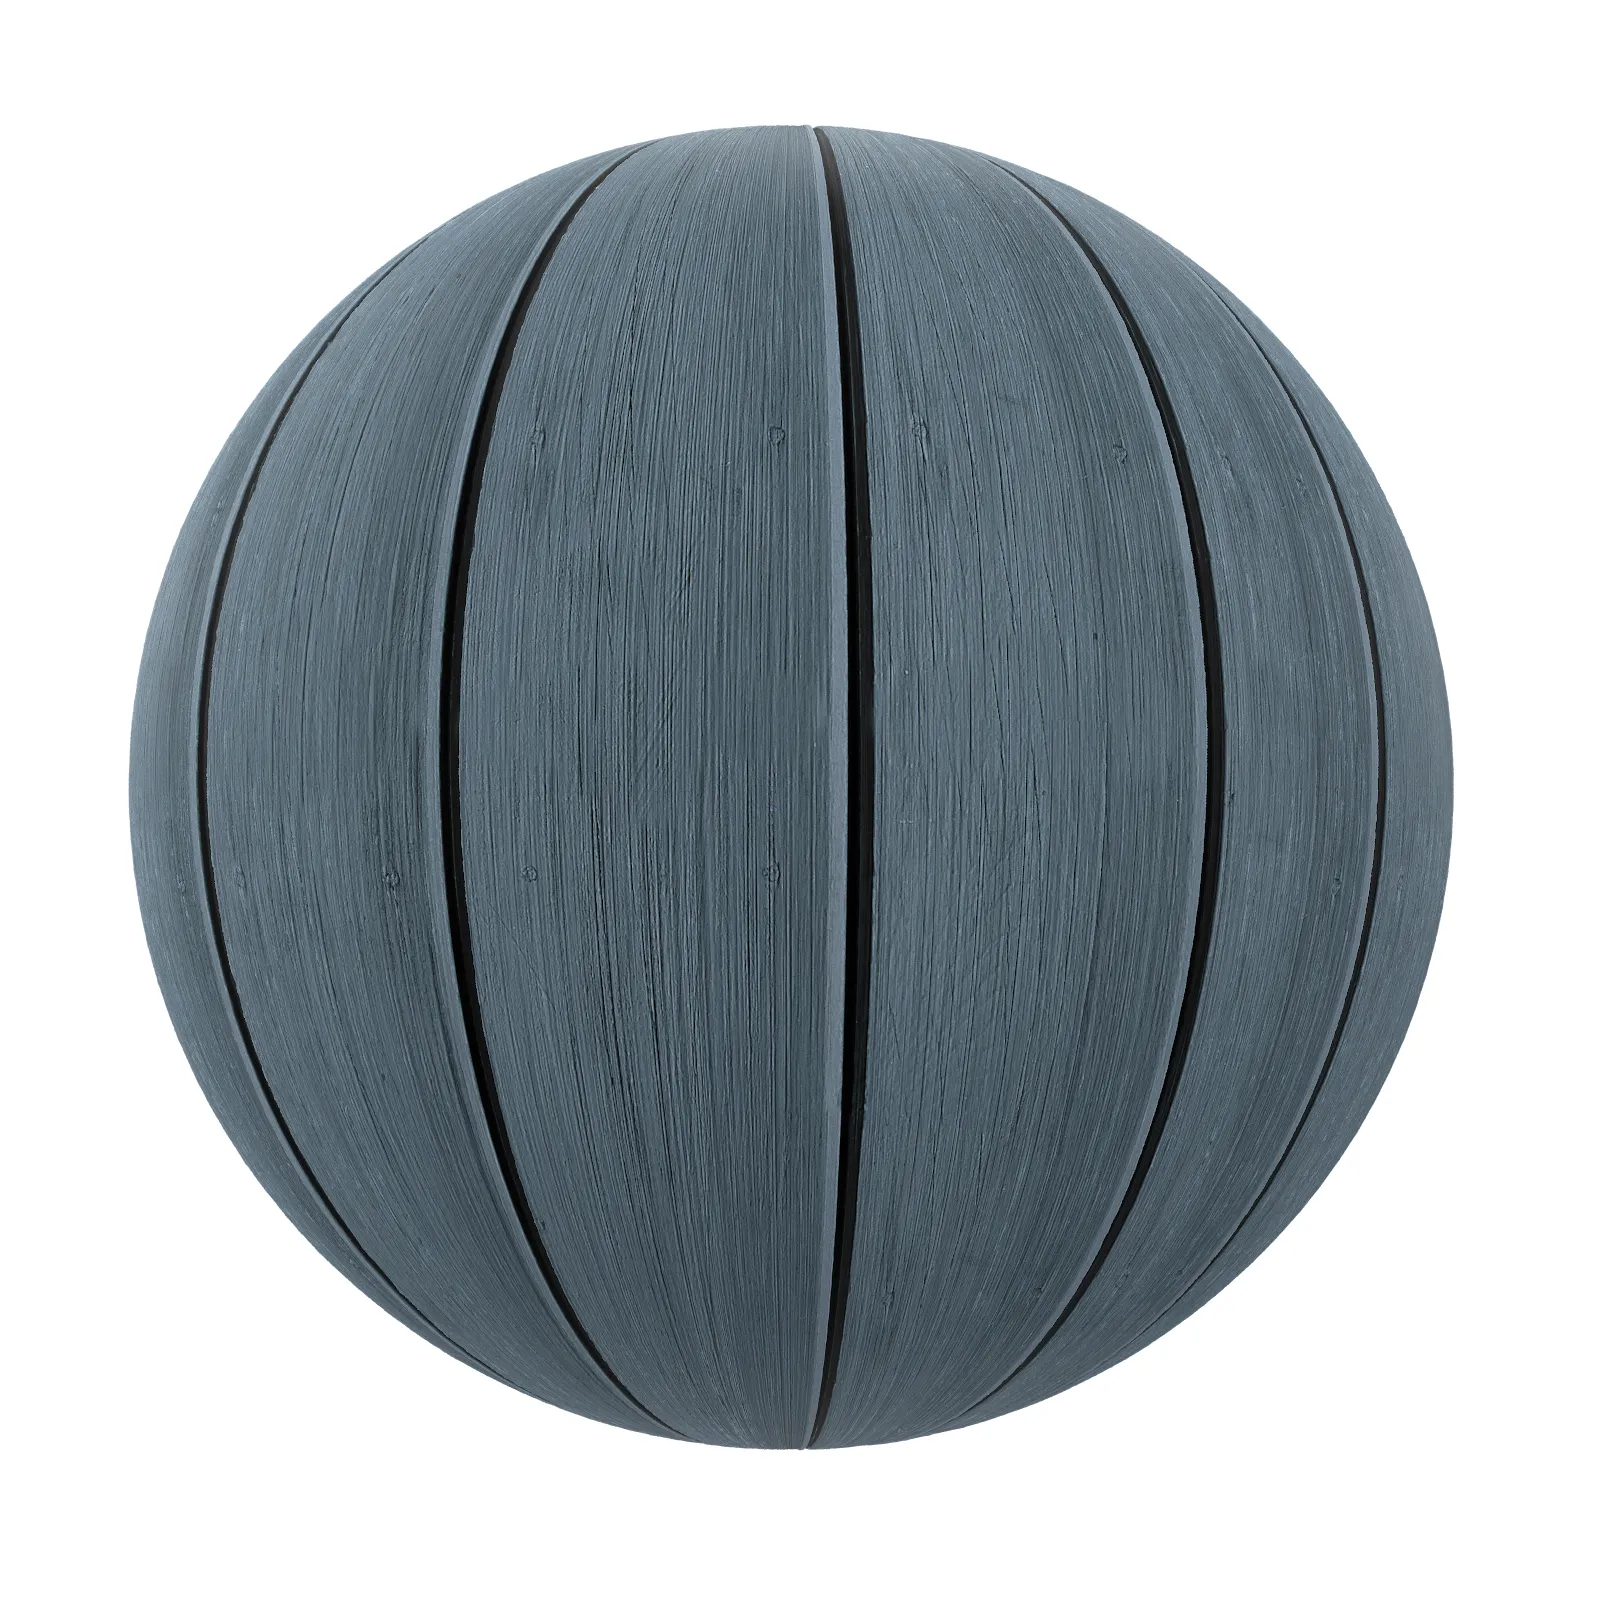 3ds Max Files – Texture – 8 – Wood Texture – 72 – Wood Texture by Minh Nguyen